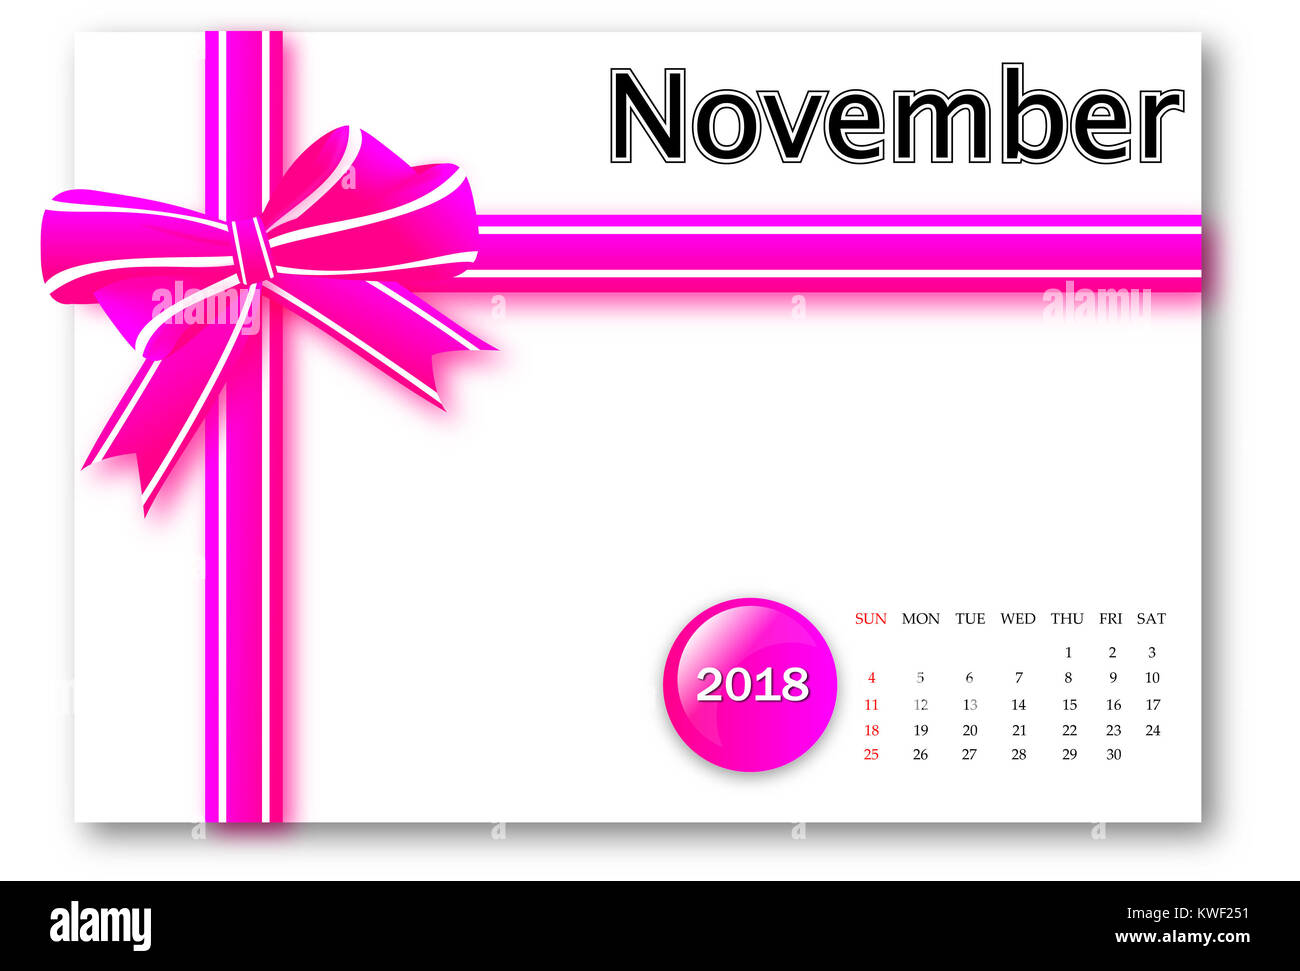 November 2018 - Calendar series with gift ribbon design Stock Photo